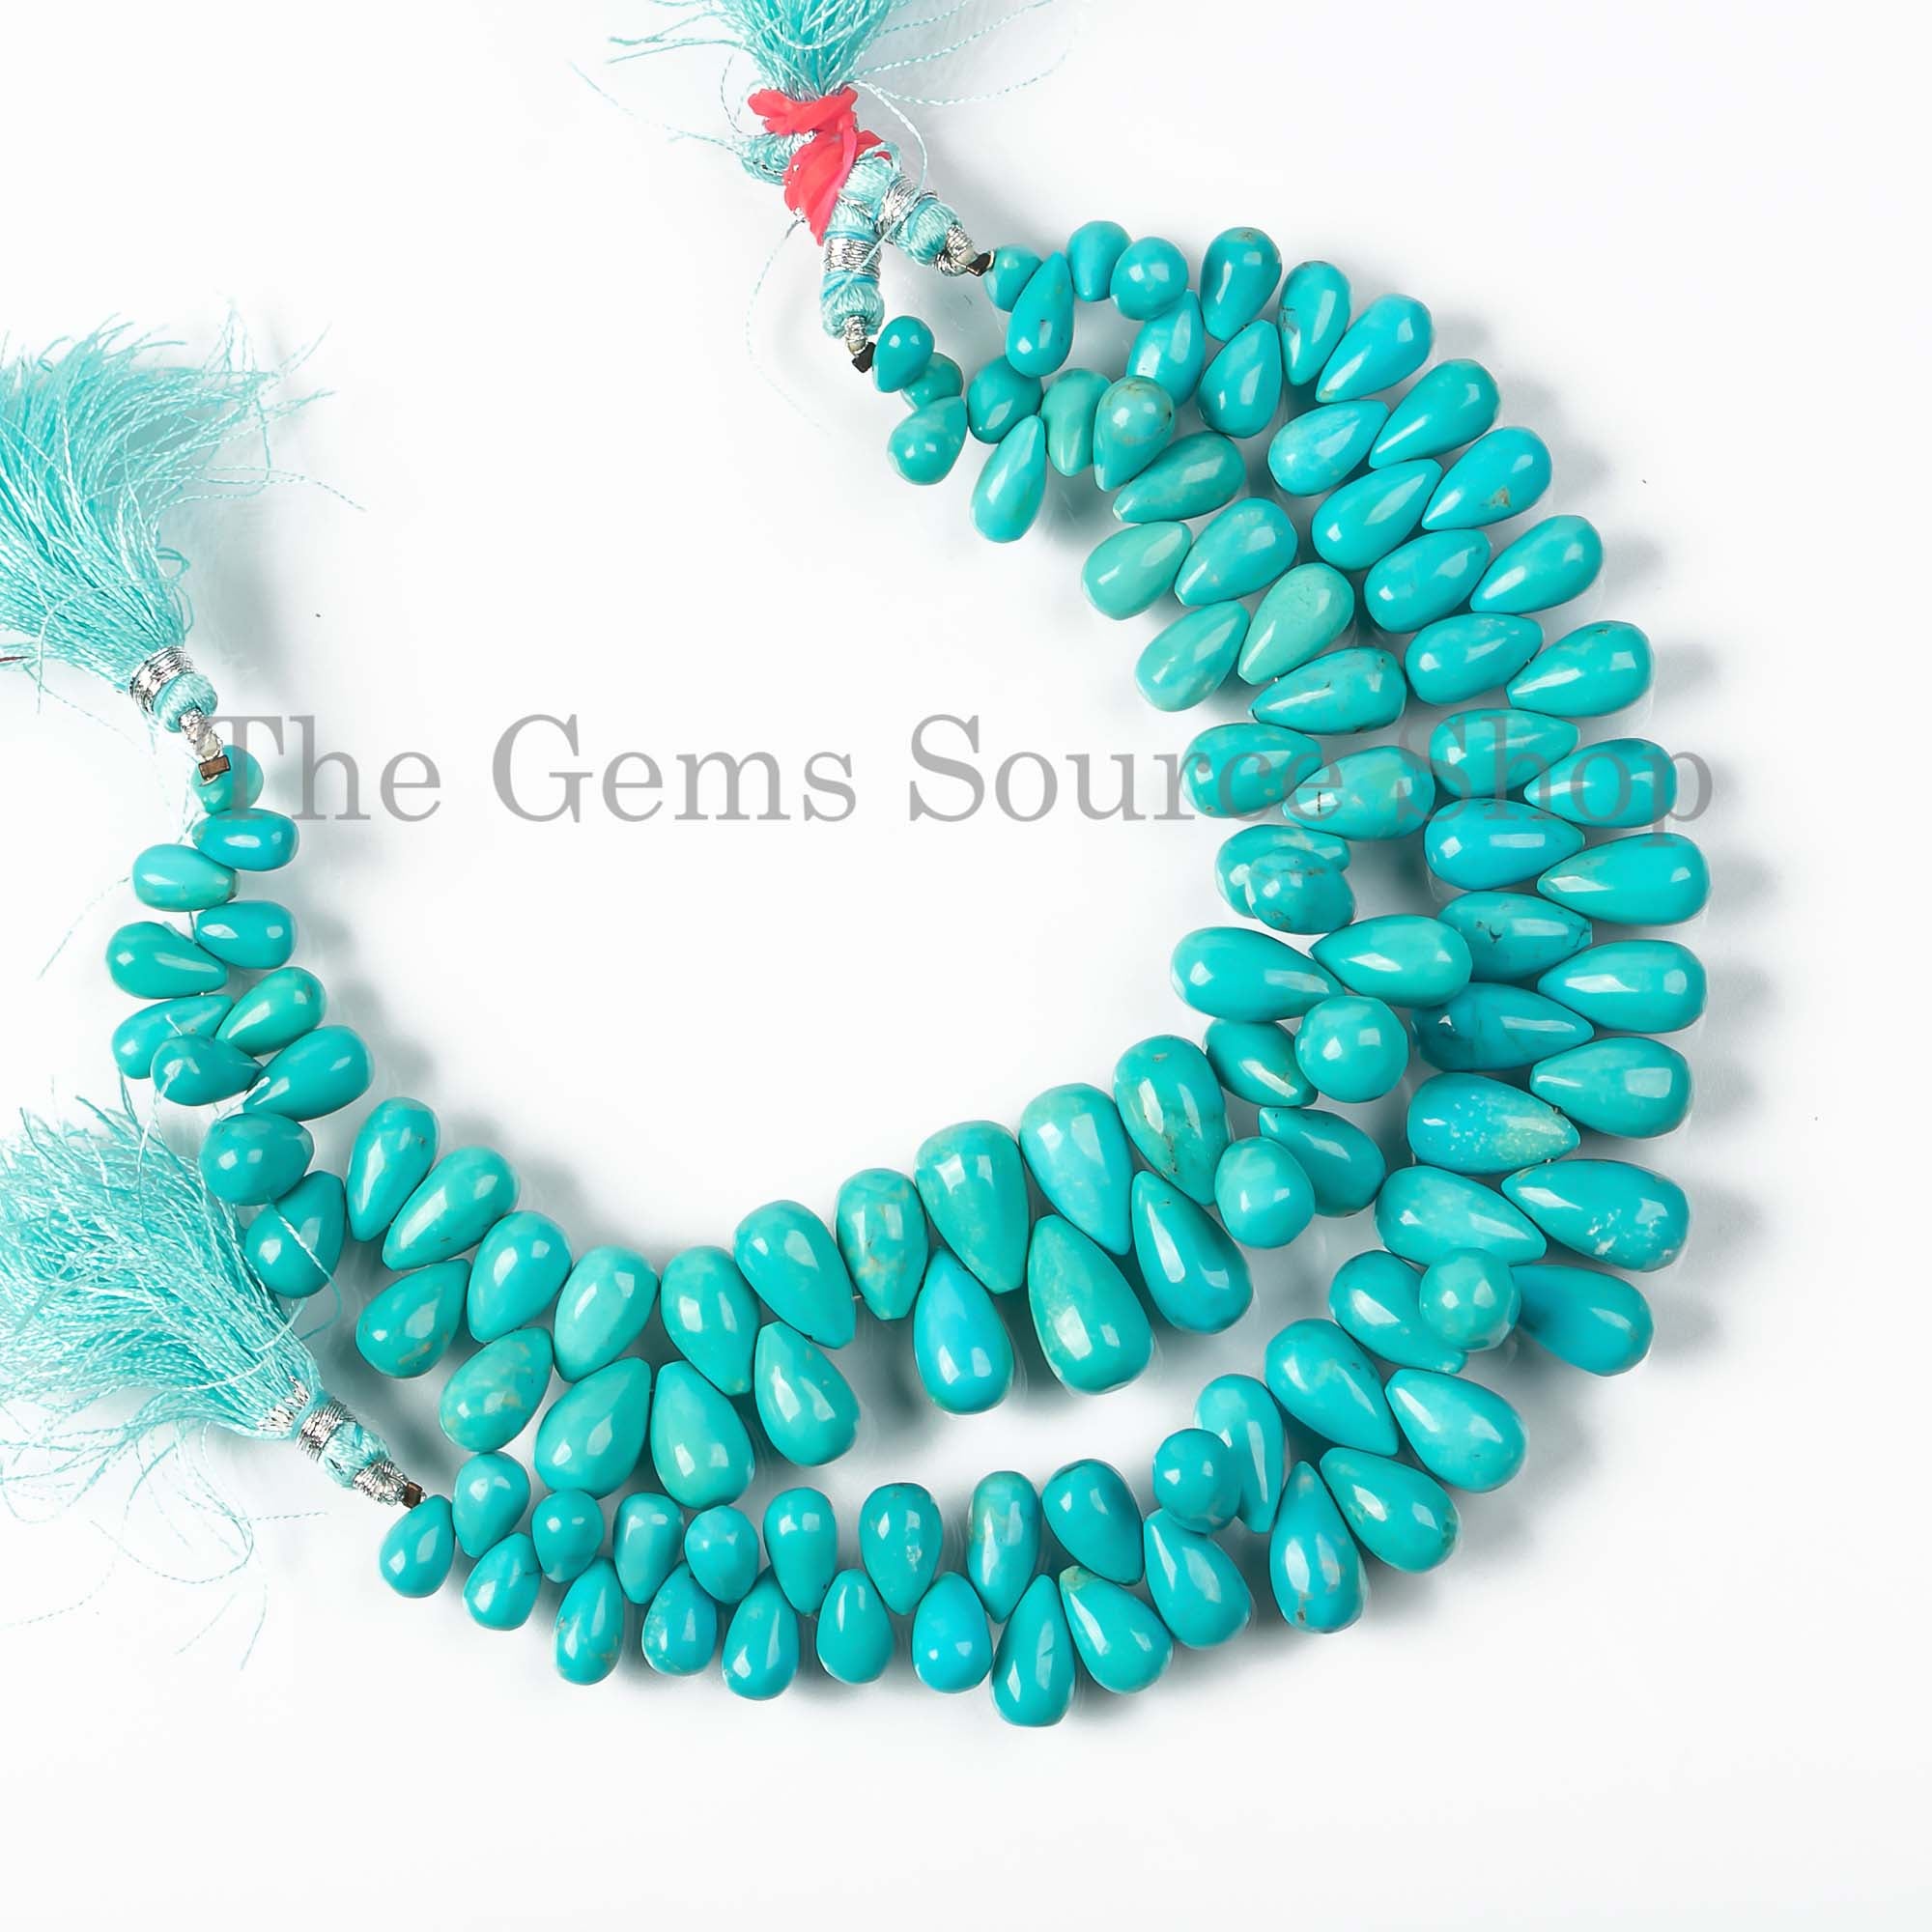 Sleeping Beauty Turquoise Smooth Beads, 4x7-9x15mm Turquoise Plain Drops Beads, Side Drill Turquoise Drops, Sleeping Beauty Turquoise Beads